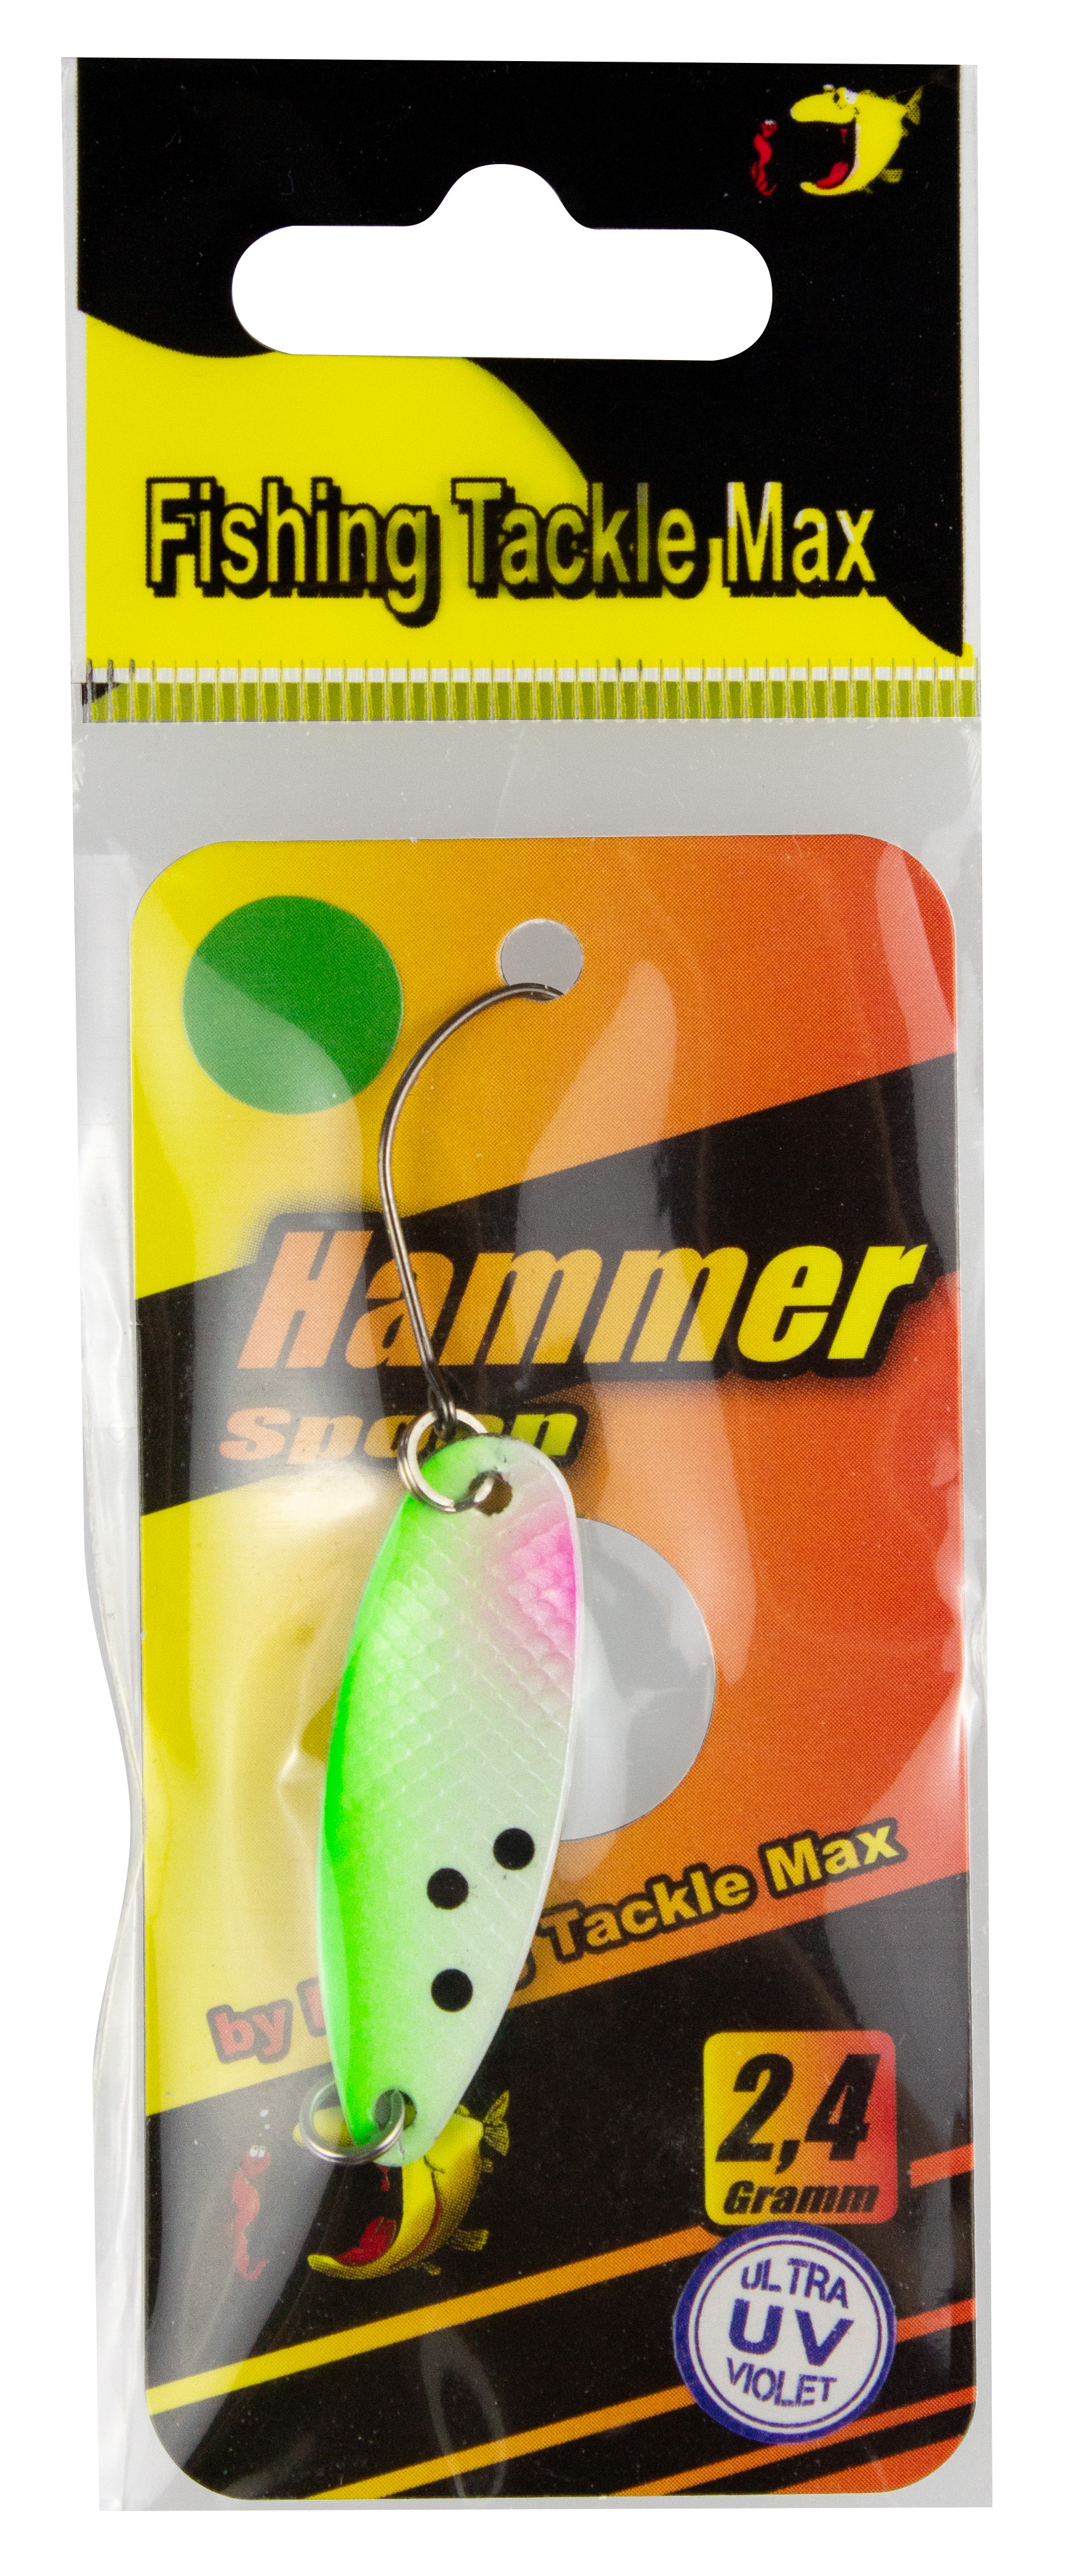 FTM Hammer Spoon 3.2g